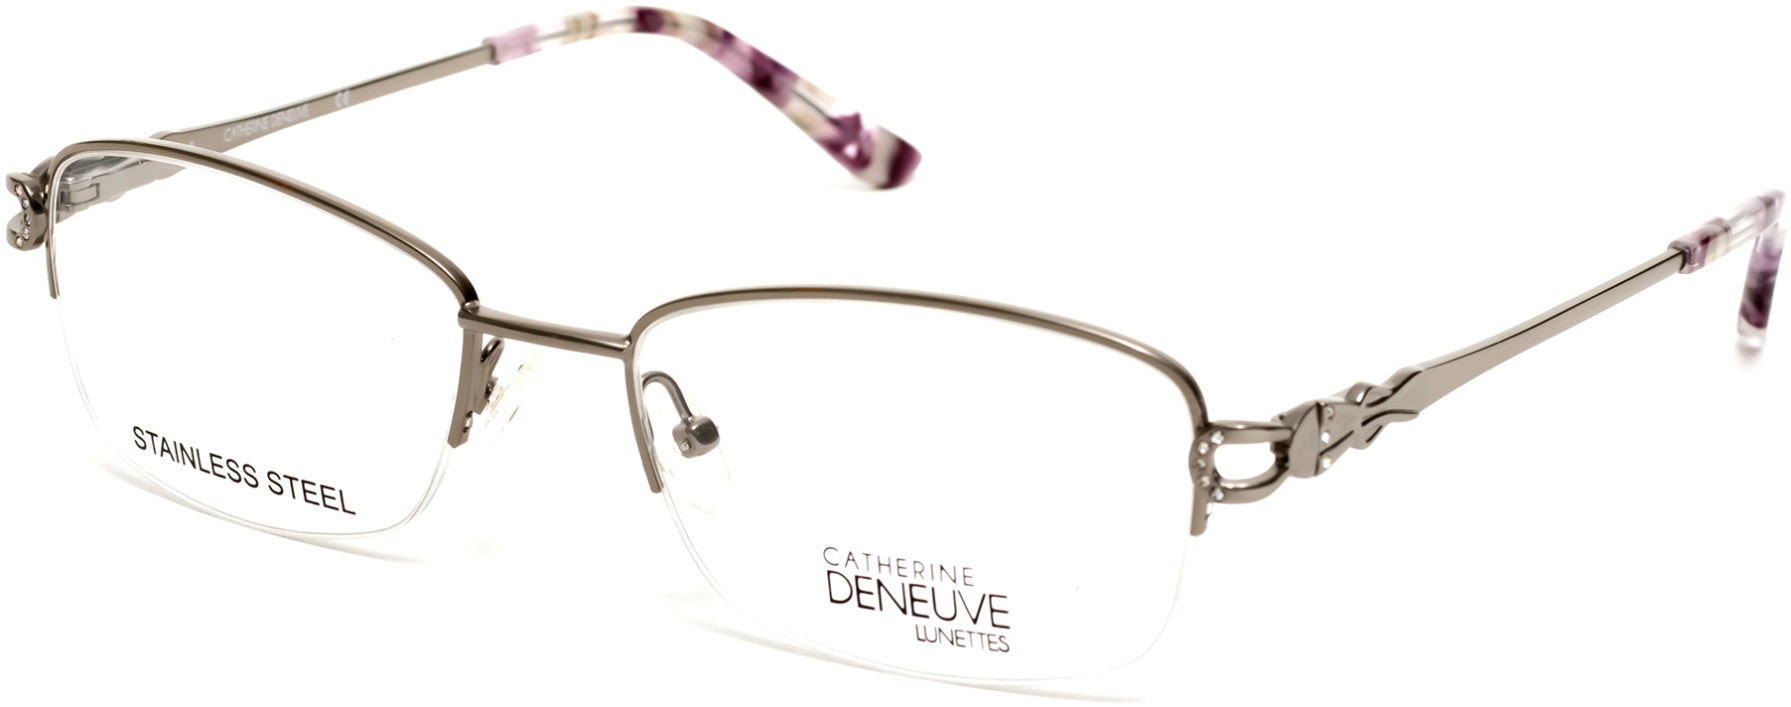 Catherine Deneuve CD0421 Geometric Eyeglasses 010-010 - Shiny Light Nickeltin